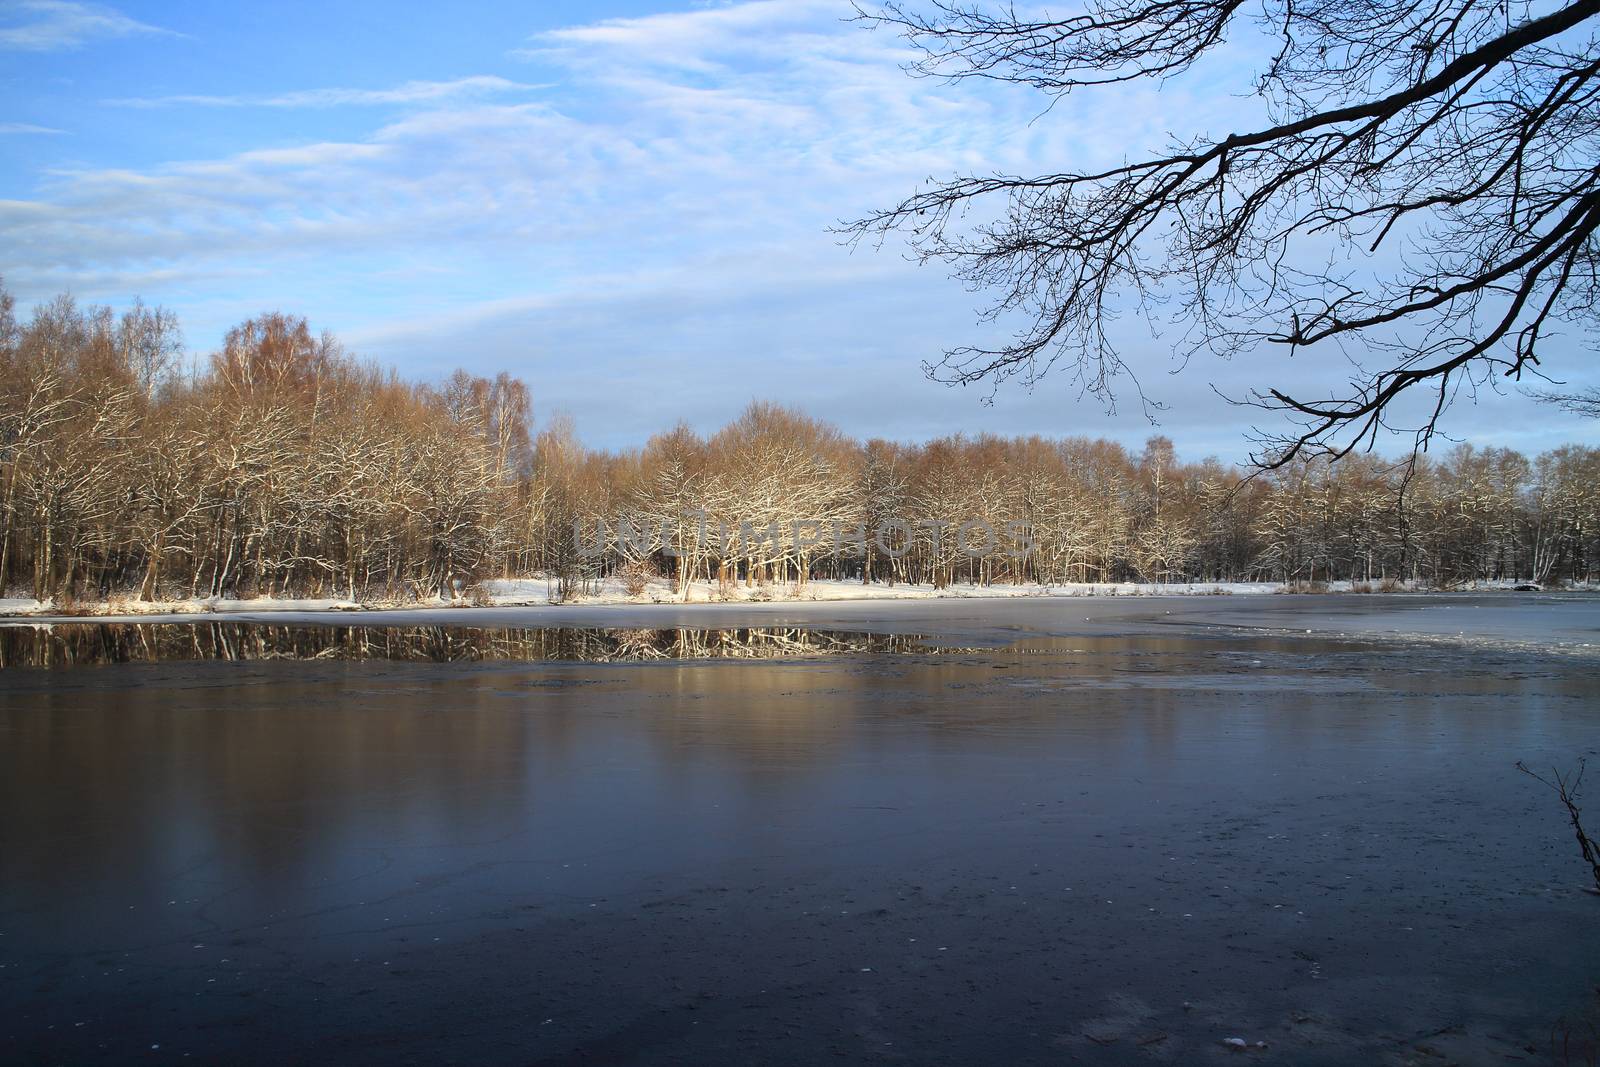  winter landscape the river is icebound by mrivserg